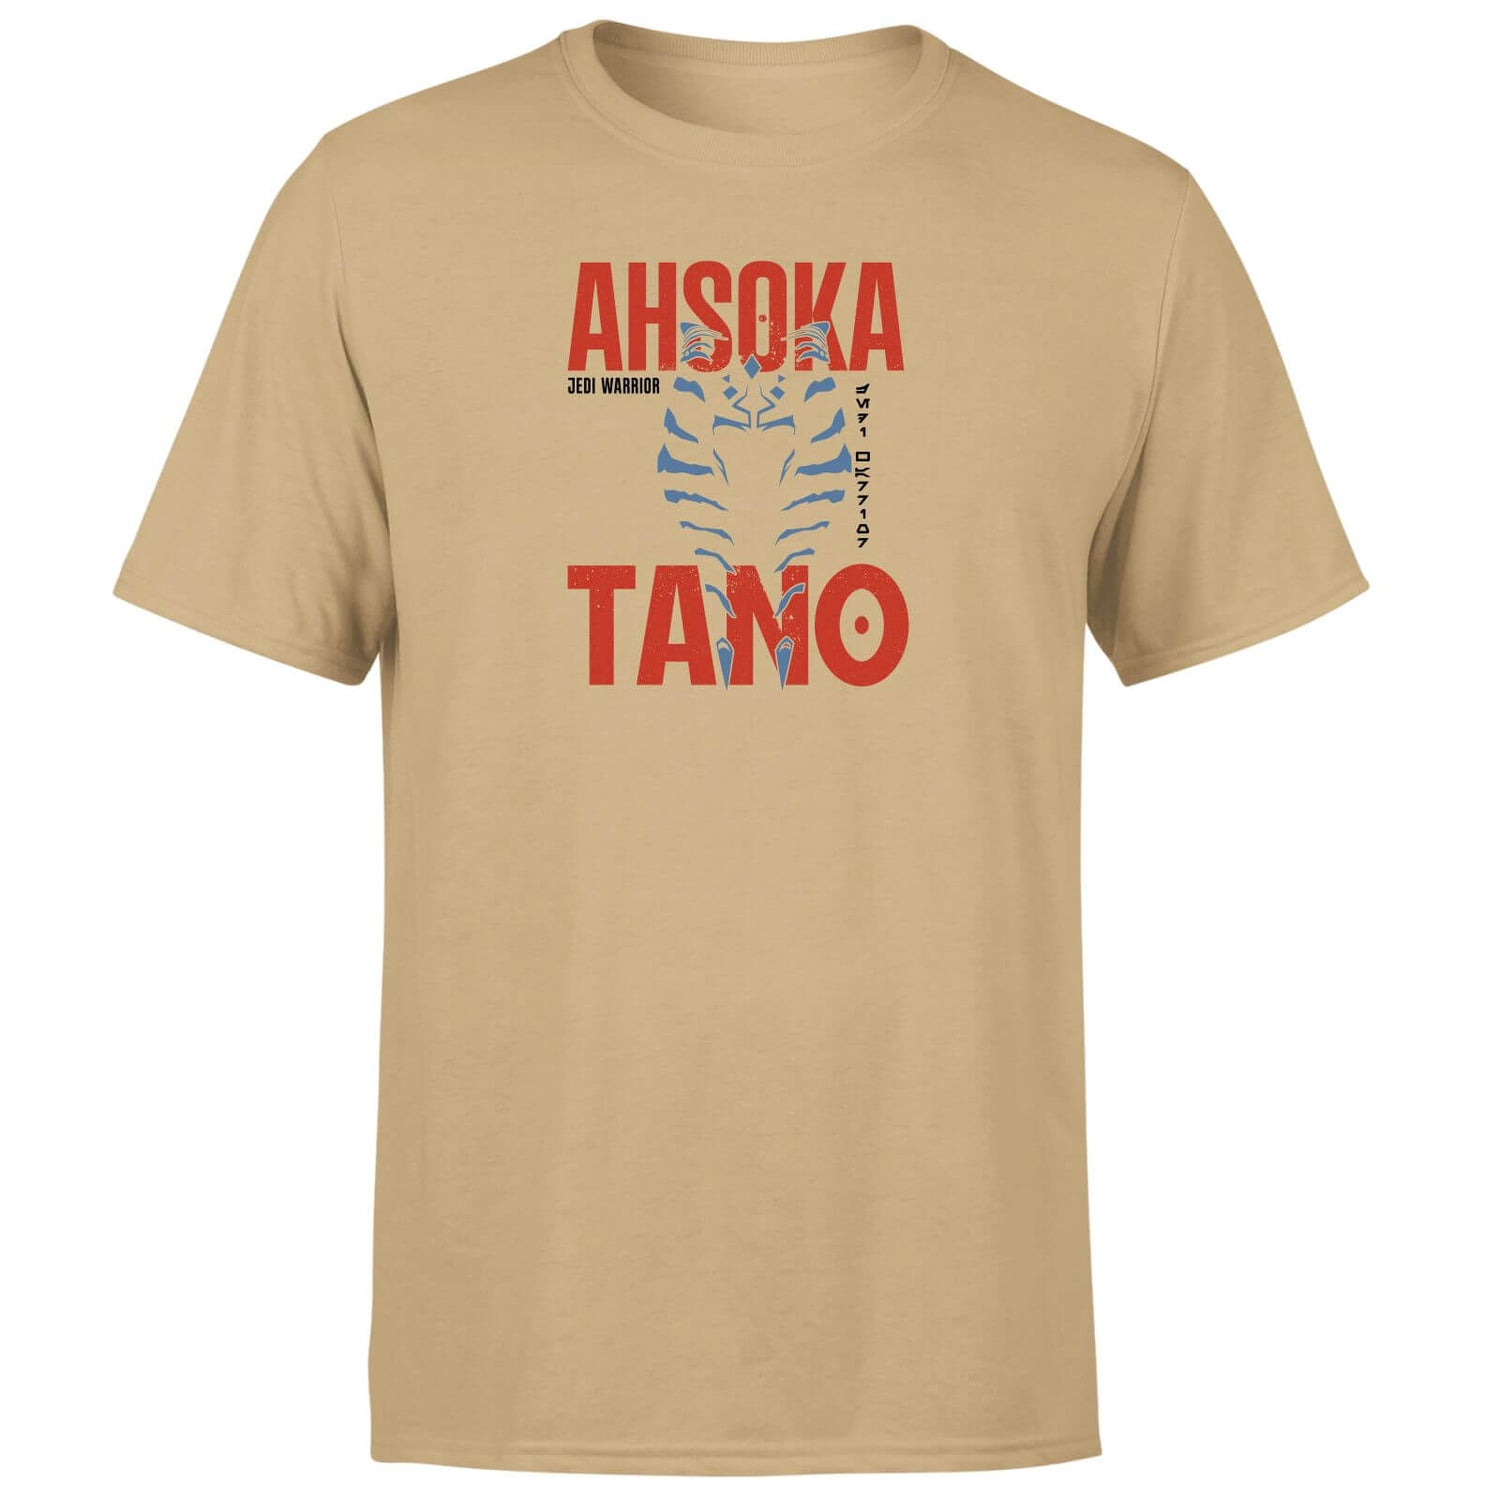 Ahsoka Stripes Men's T-Shirt - Tan